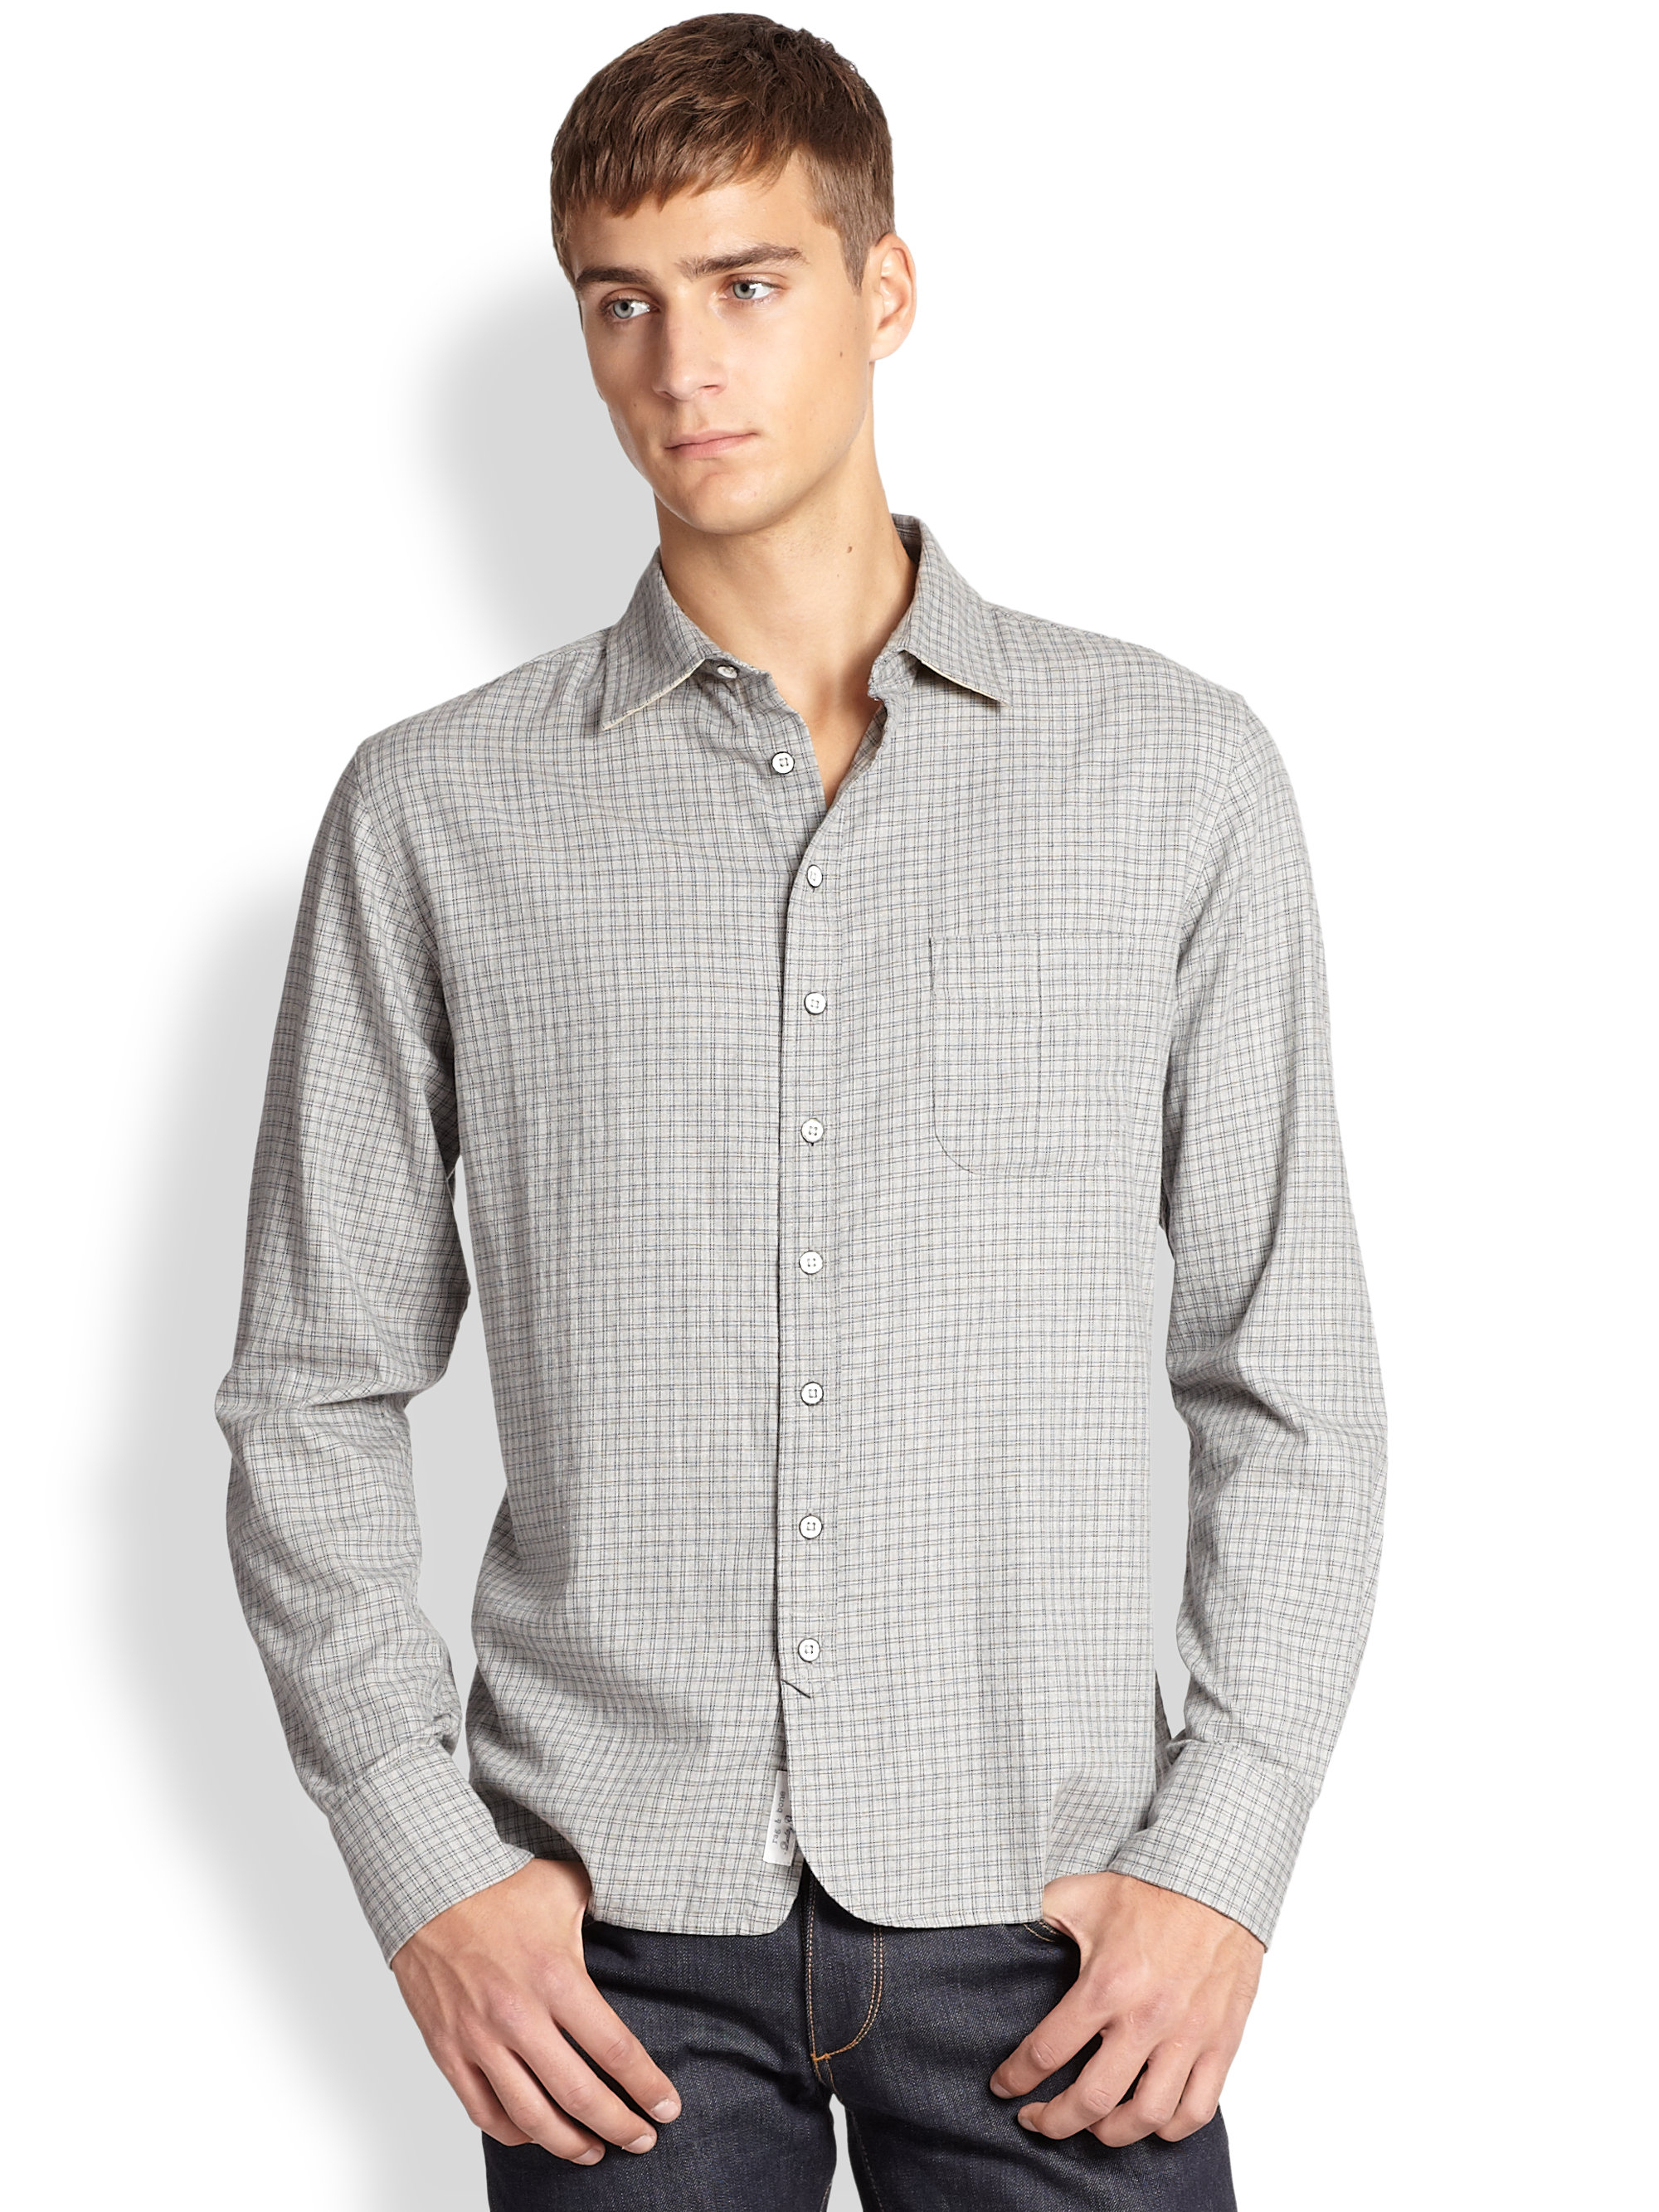 Lyst - Rag & Bone Three-Quarter Placket Shirt in Gray for Men